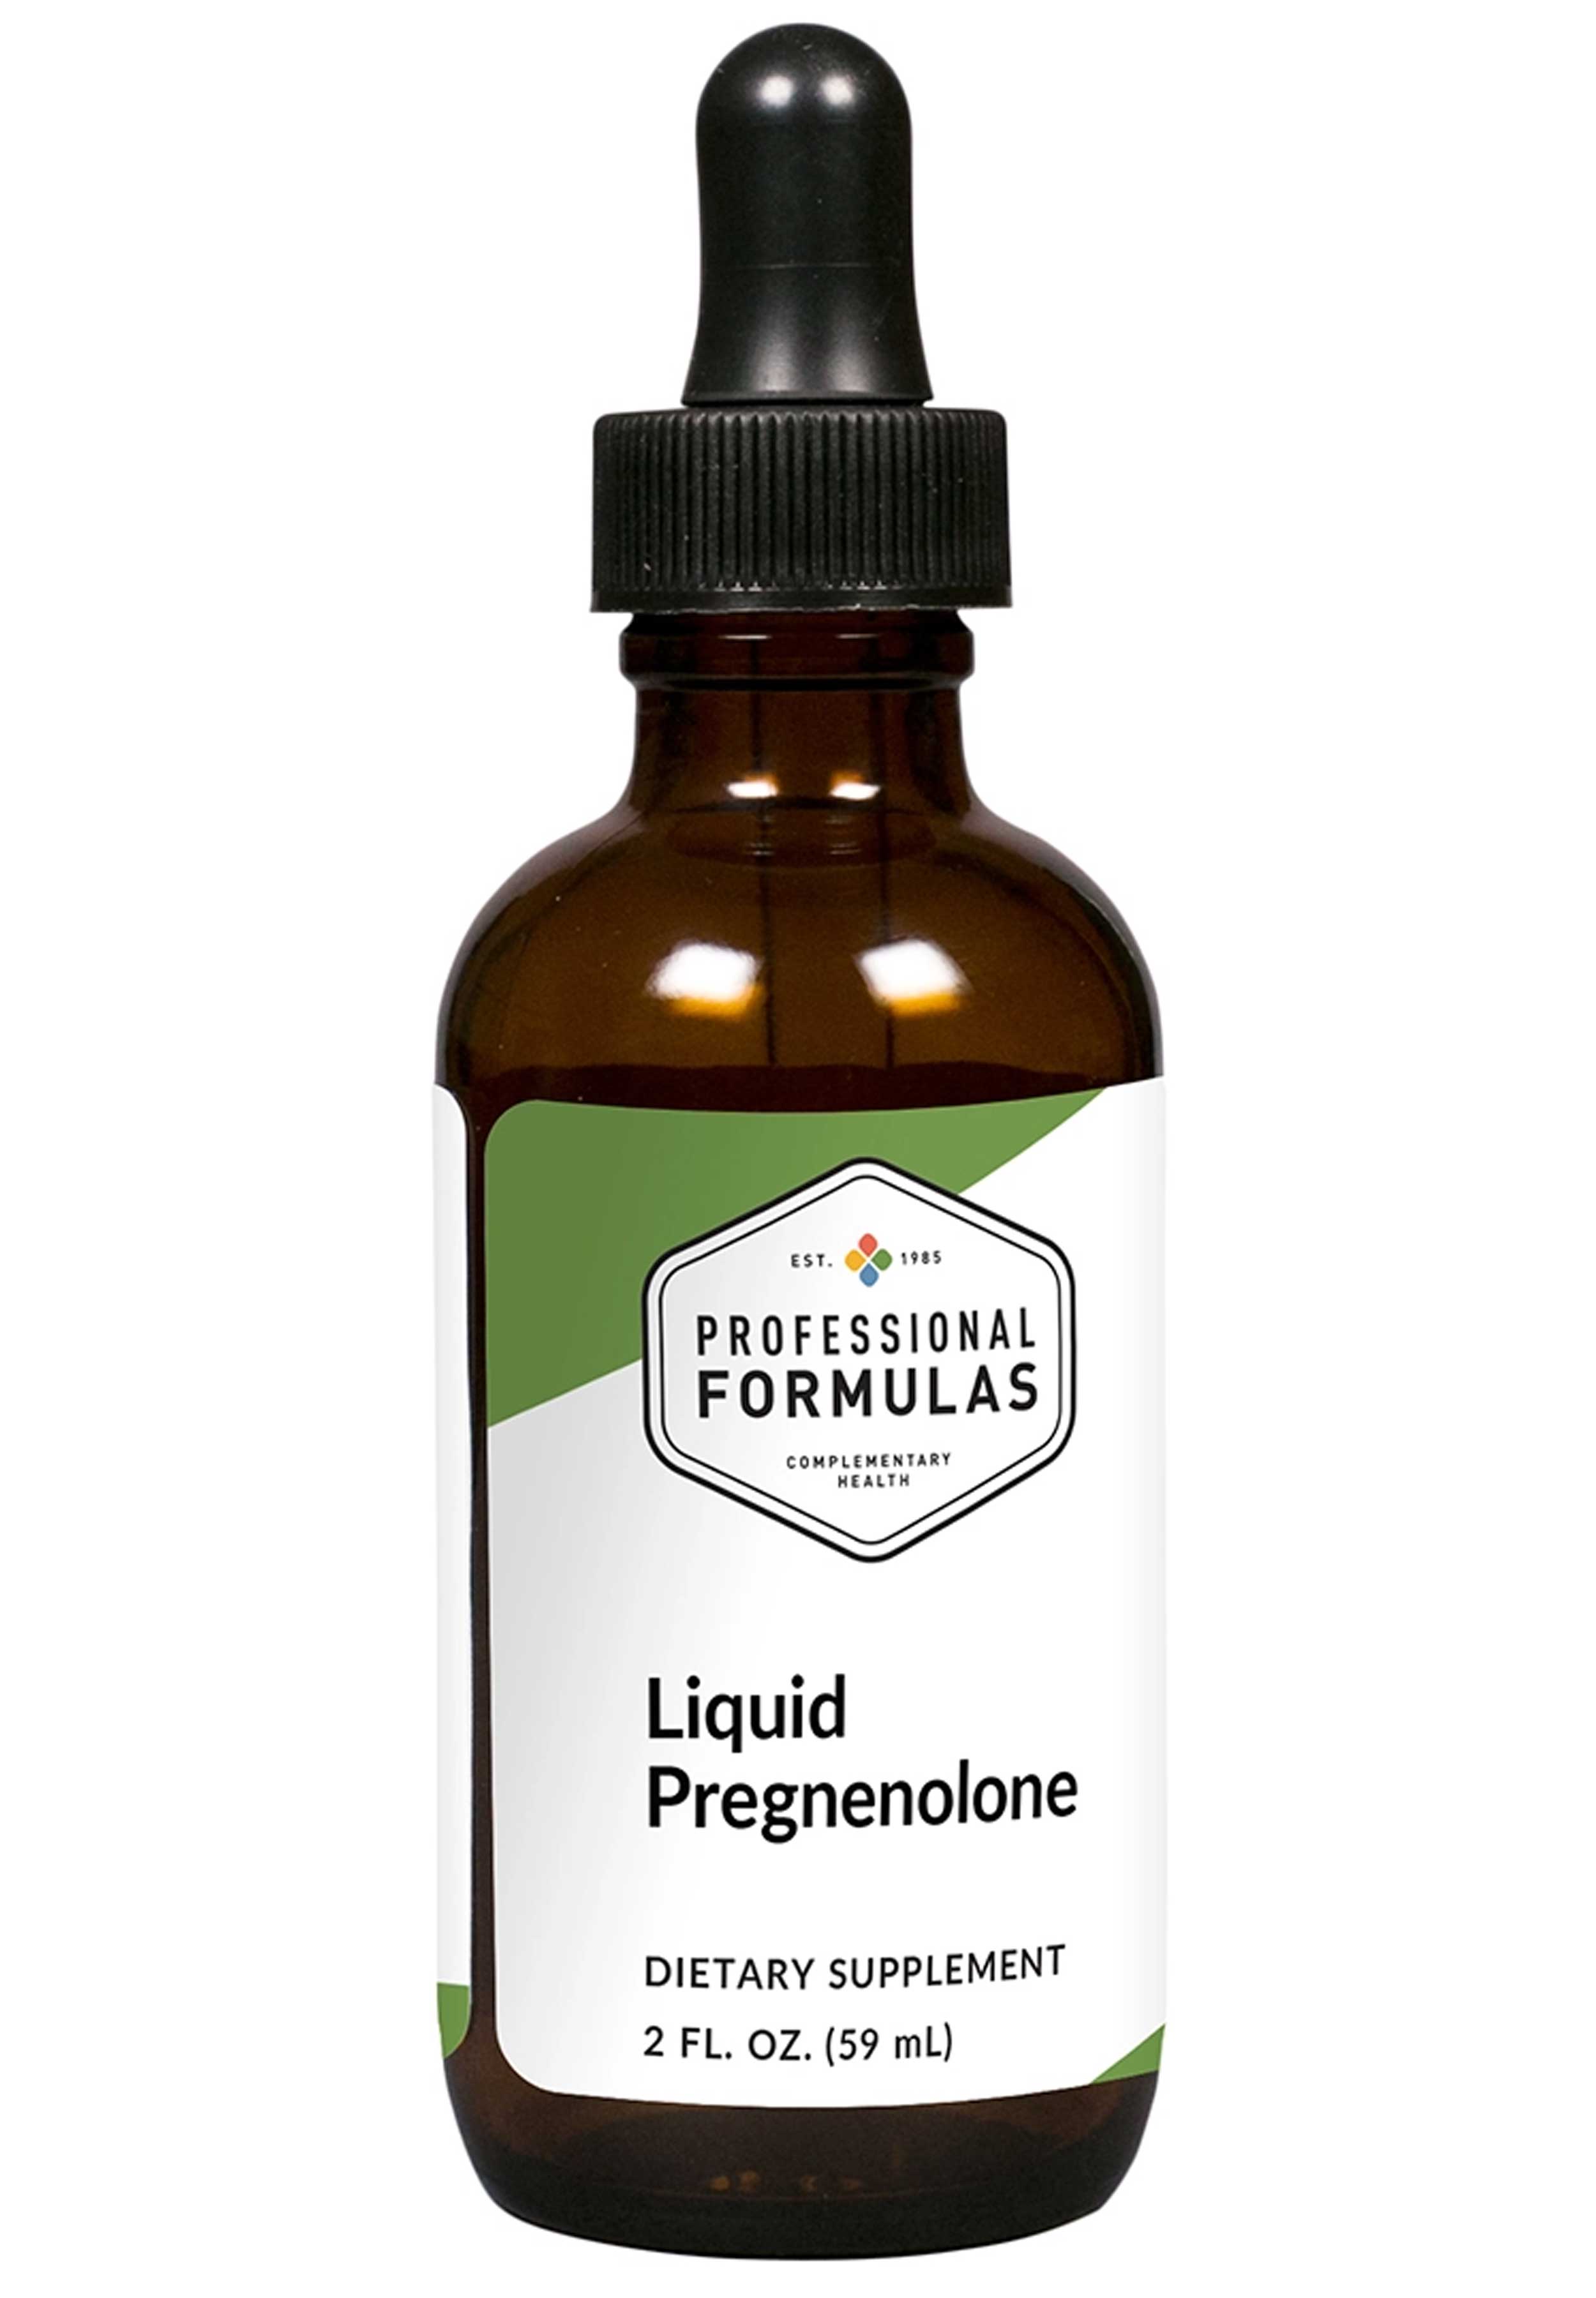 Professional Formulas Liquid Pregnenolone